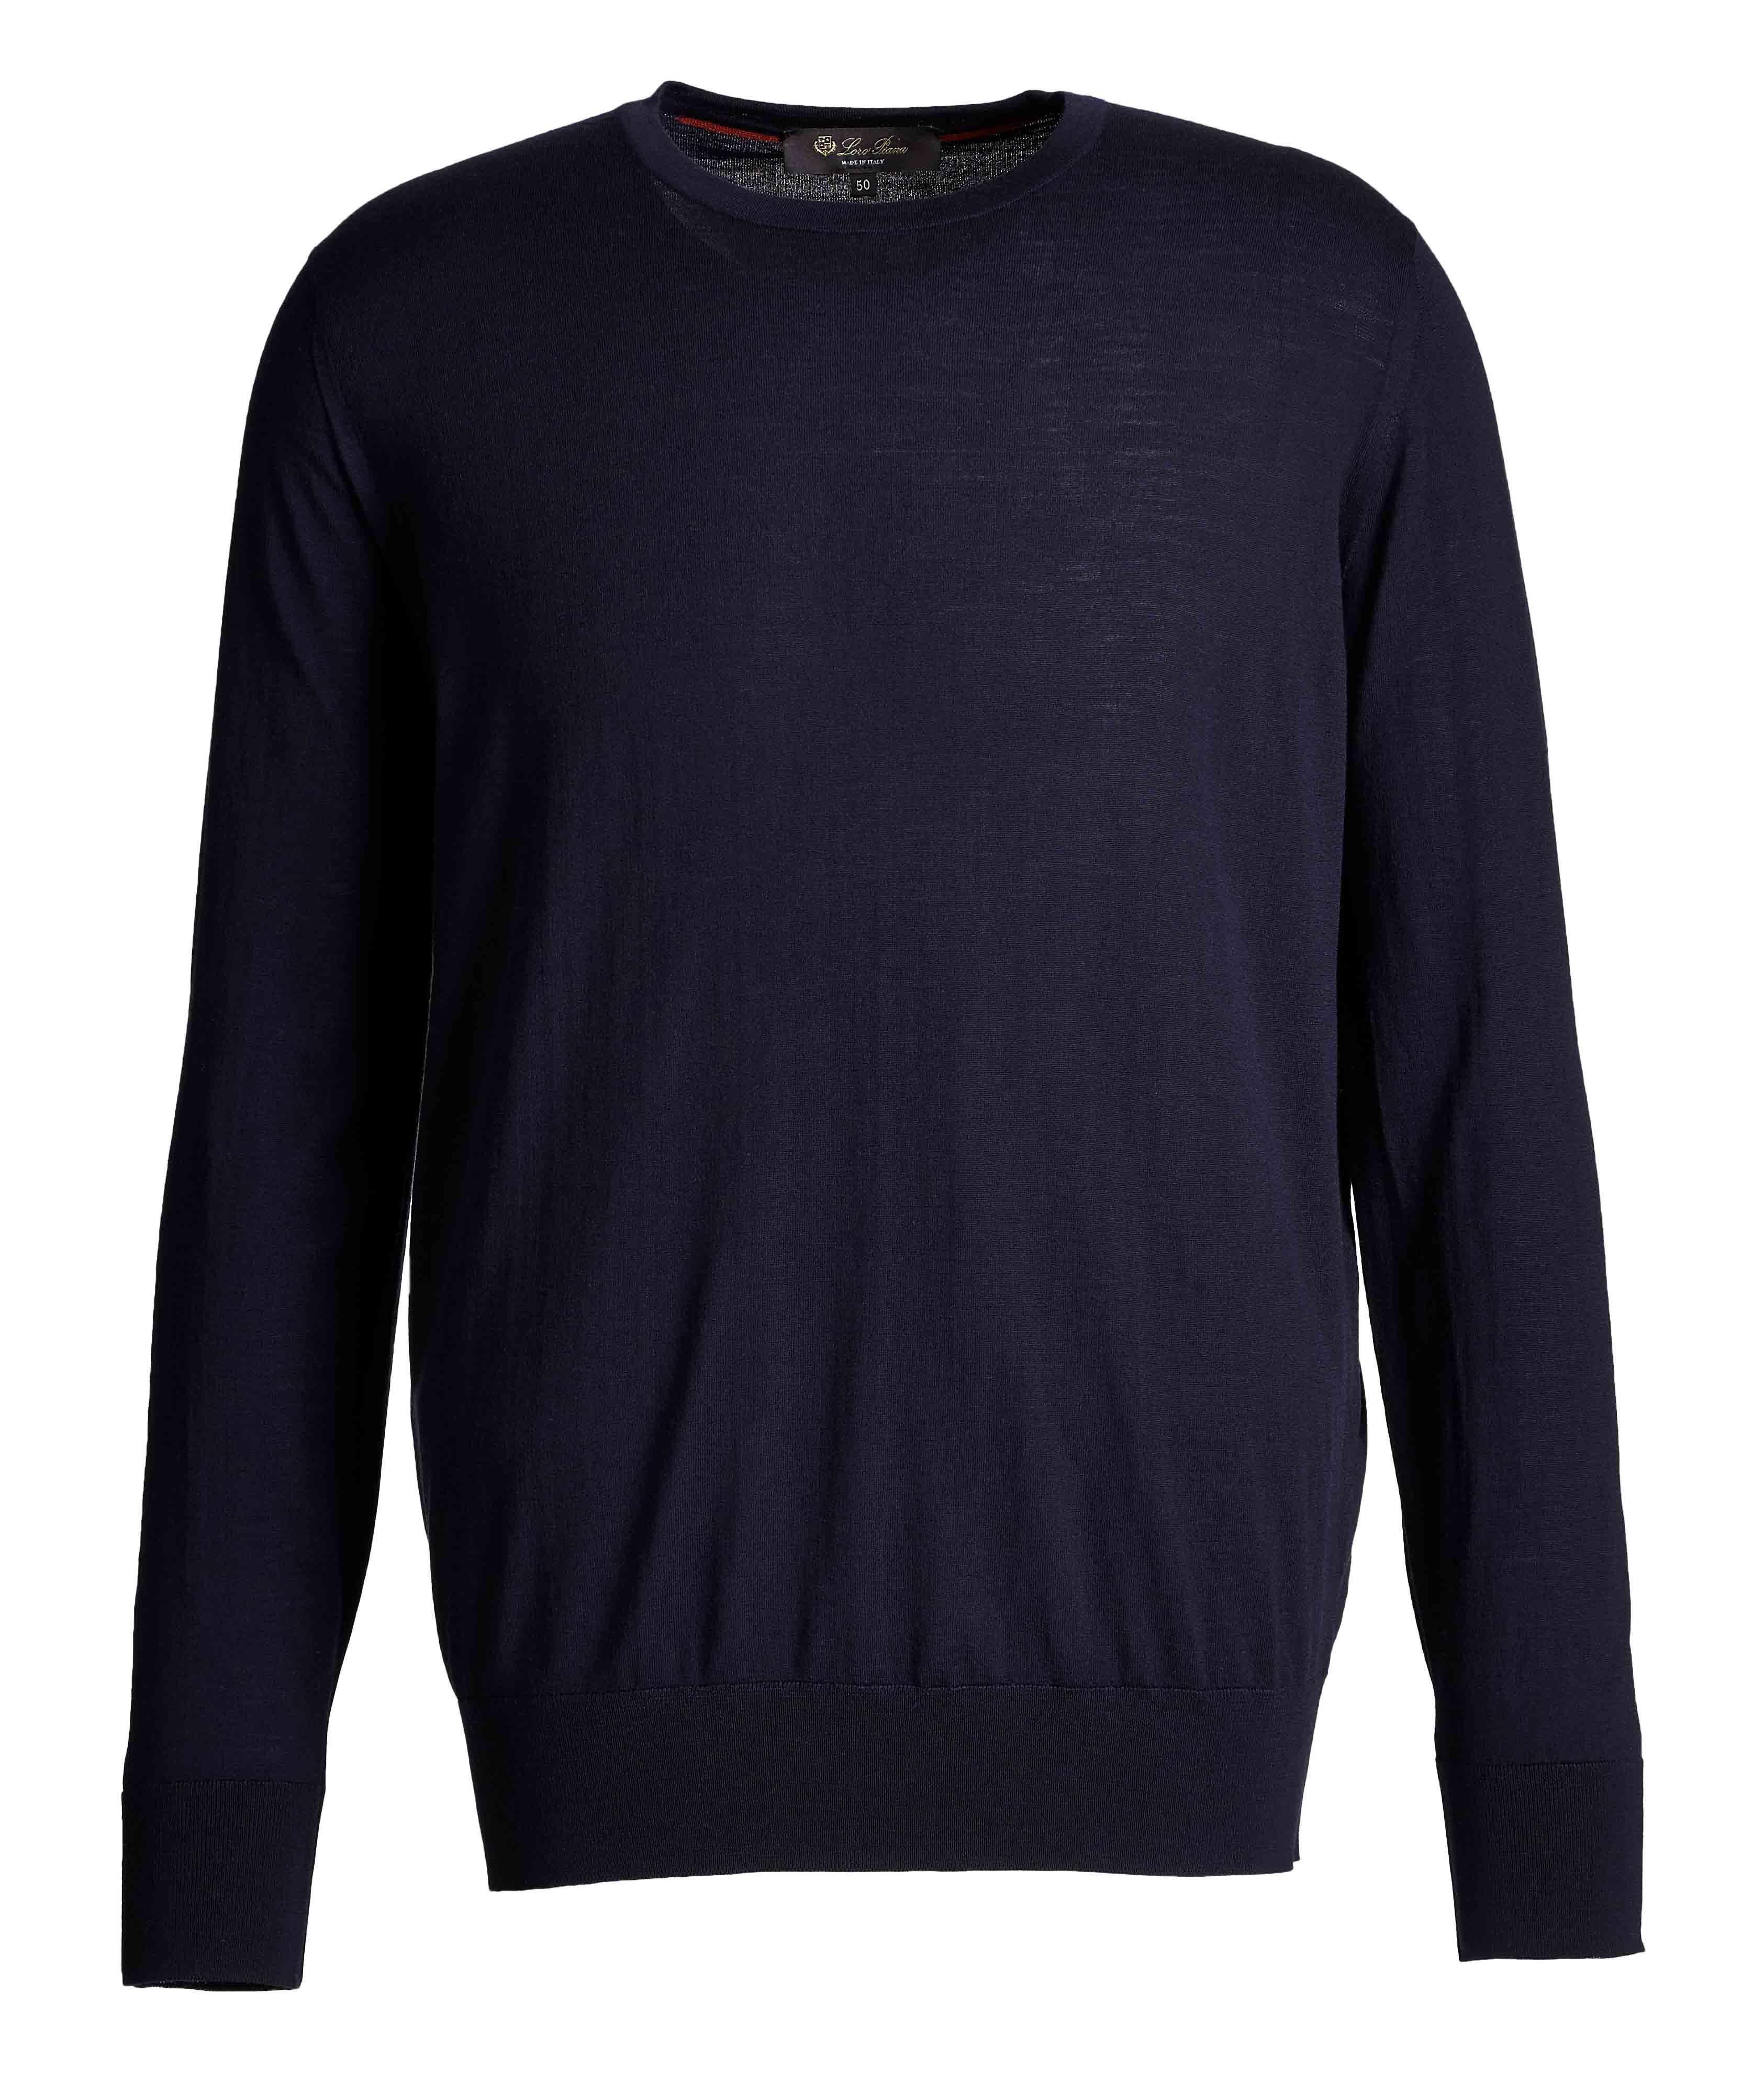 Wool Long-Sleeve T-Shirt image 0